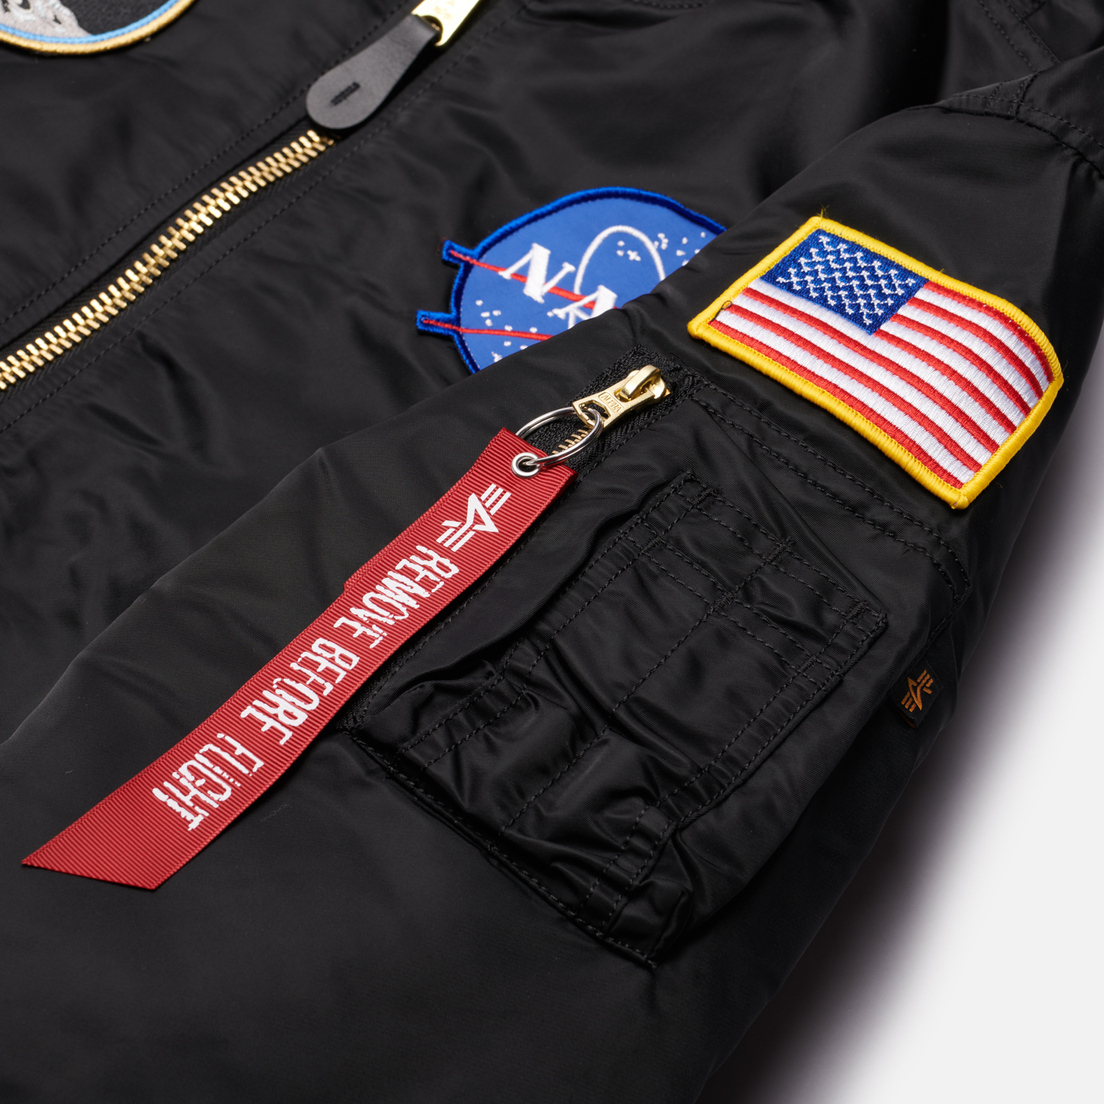 Alpha Industries Мужская куртка бомбер MA-1 Apollo NASA